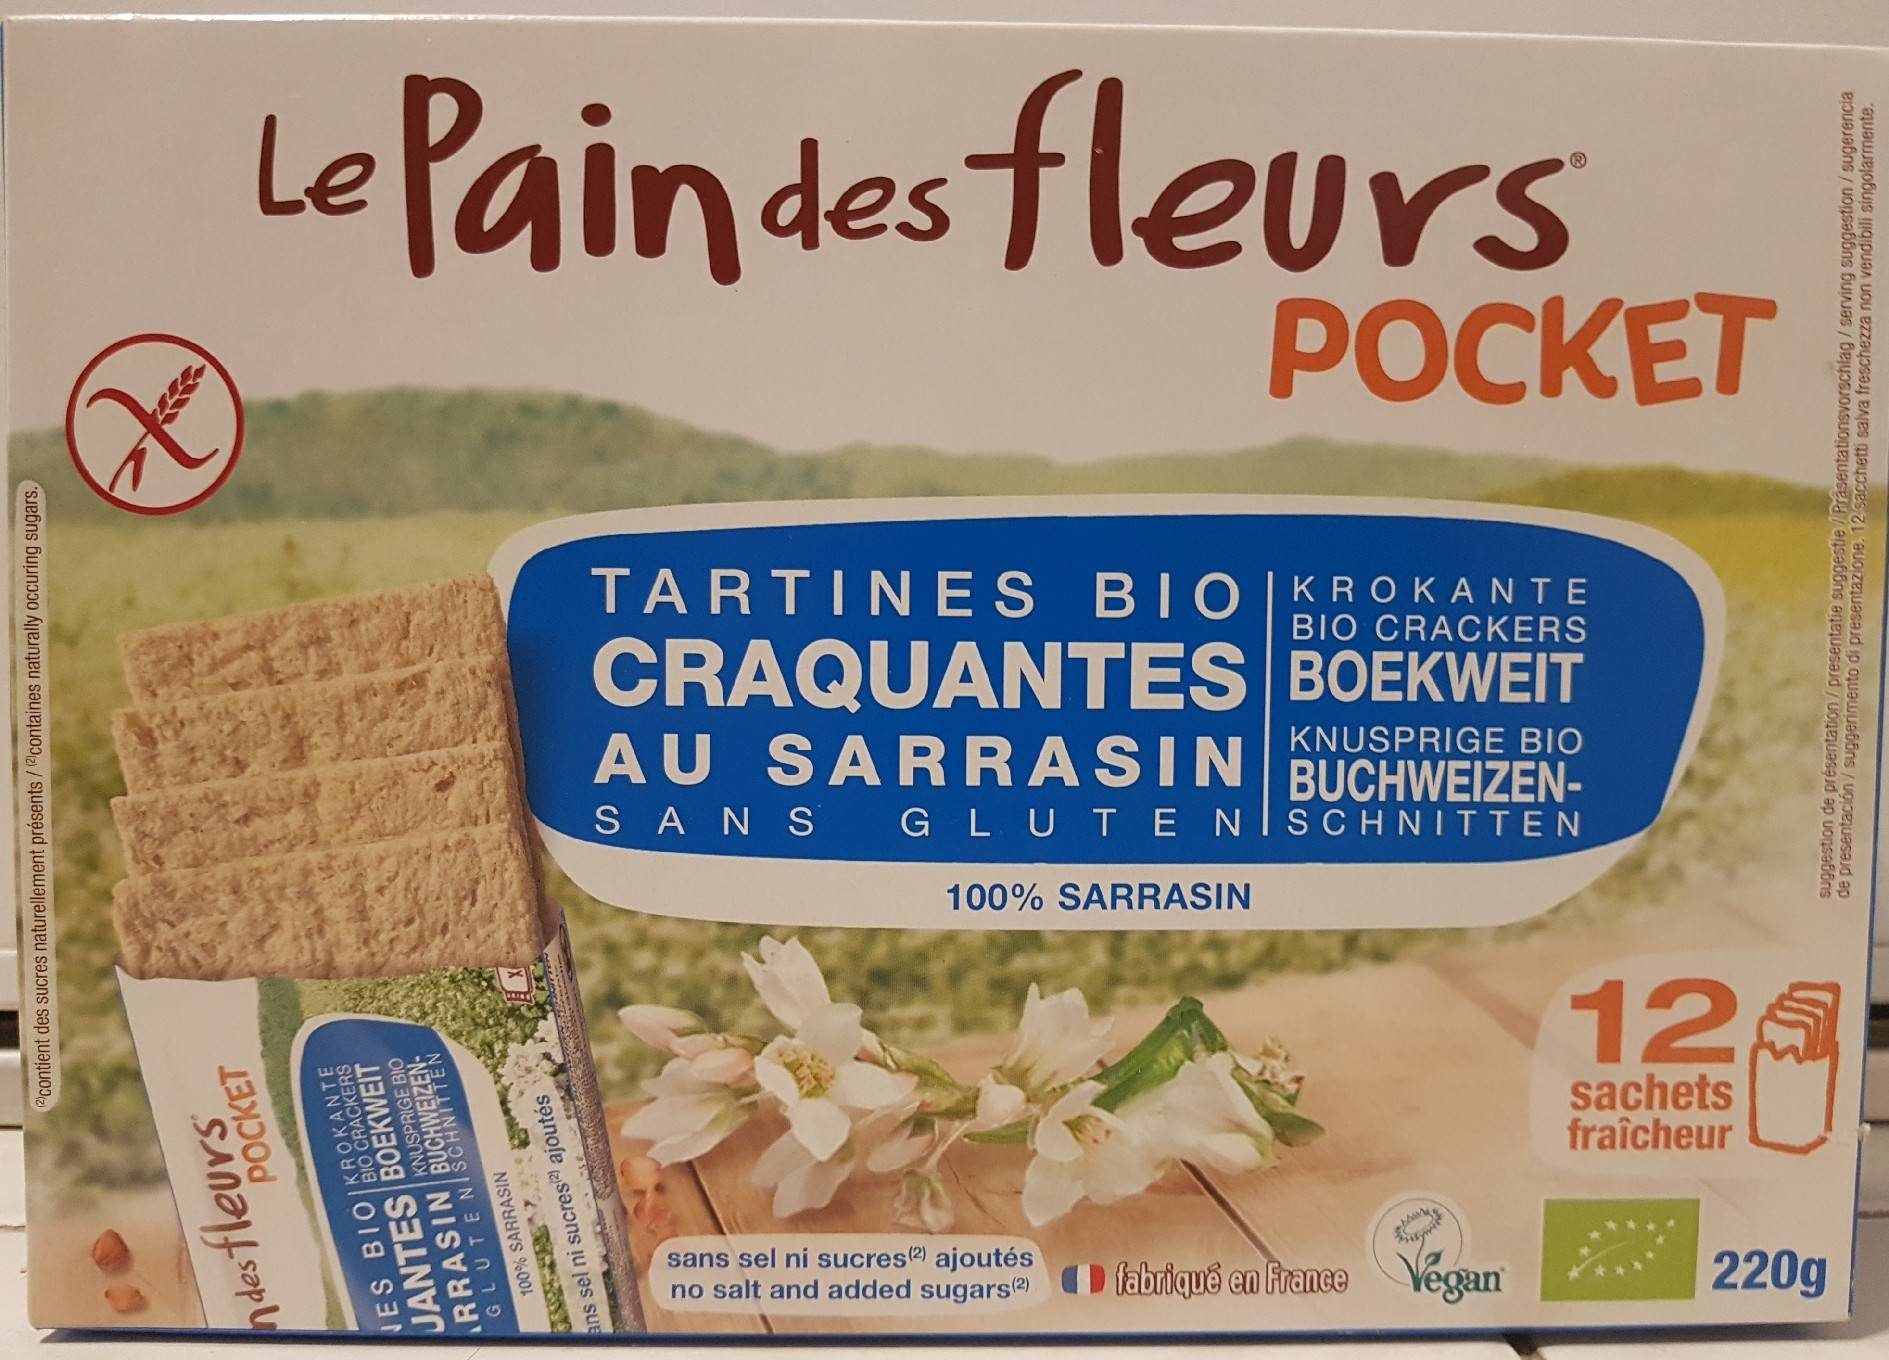 Tartine craquantes bio au sarrasin pocket - Product - fr